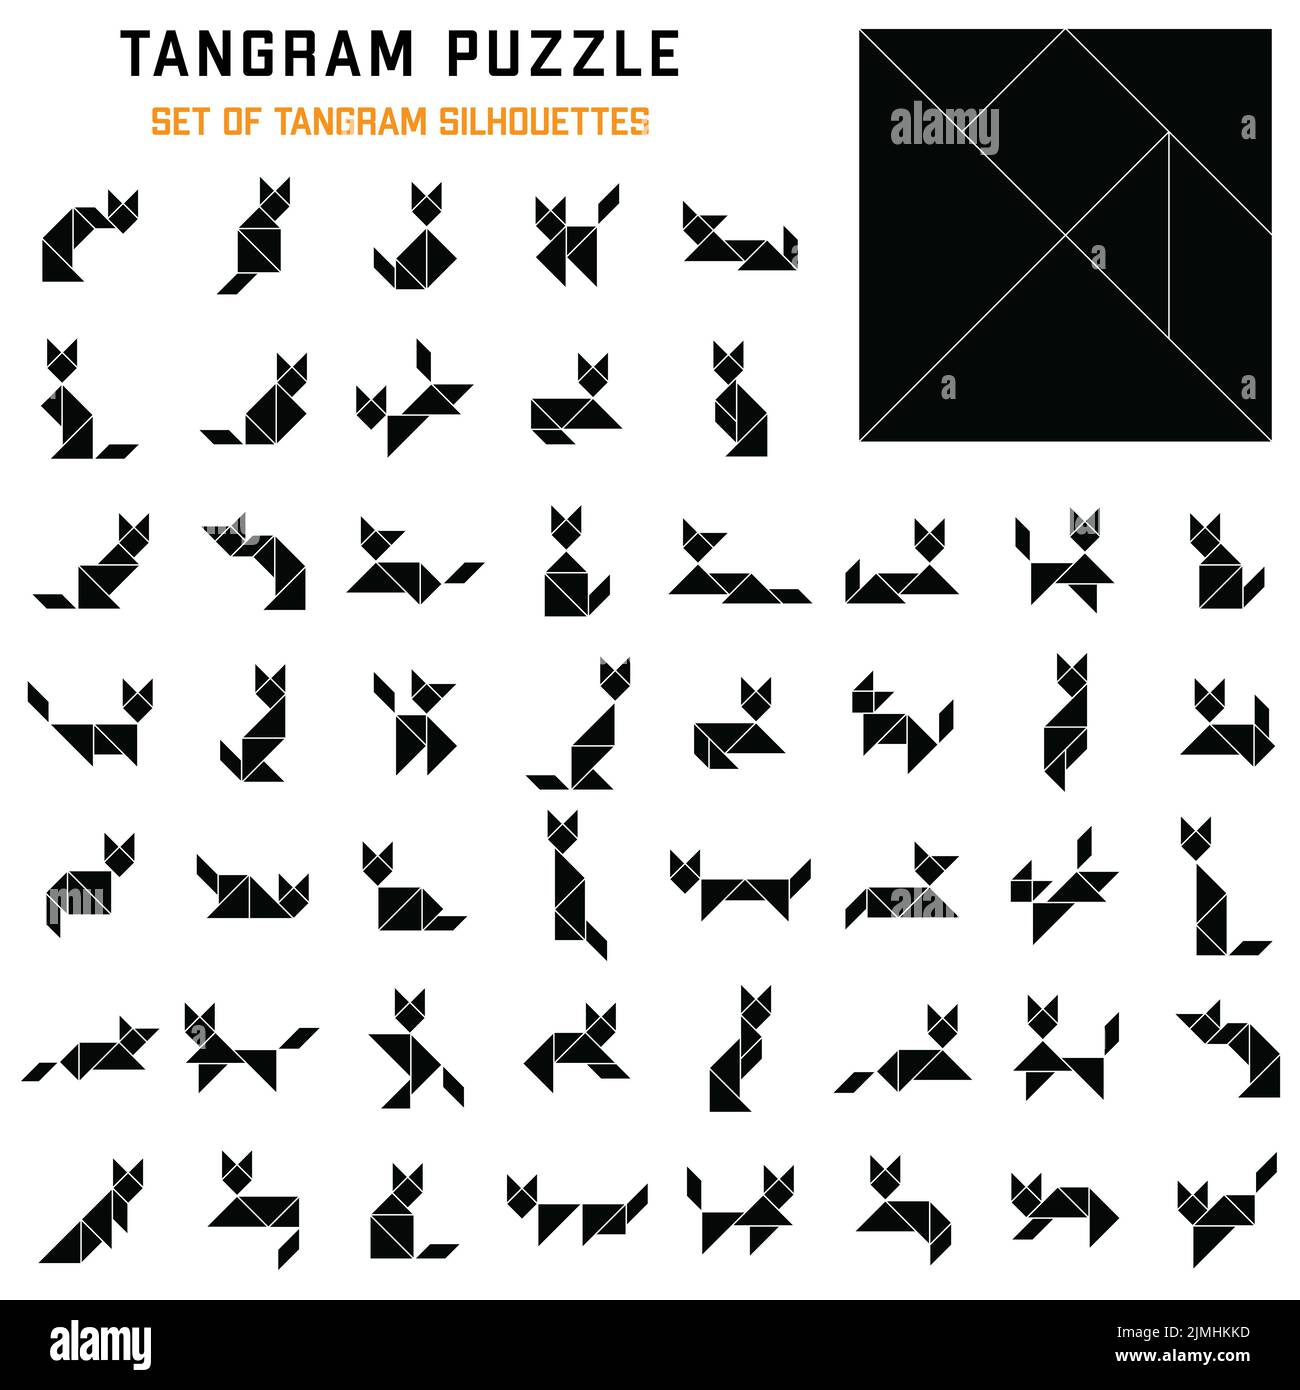 Tangram puzzle for kids. Set of tangram cats. Stock Vector